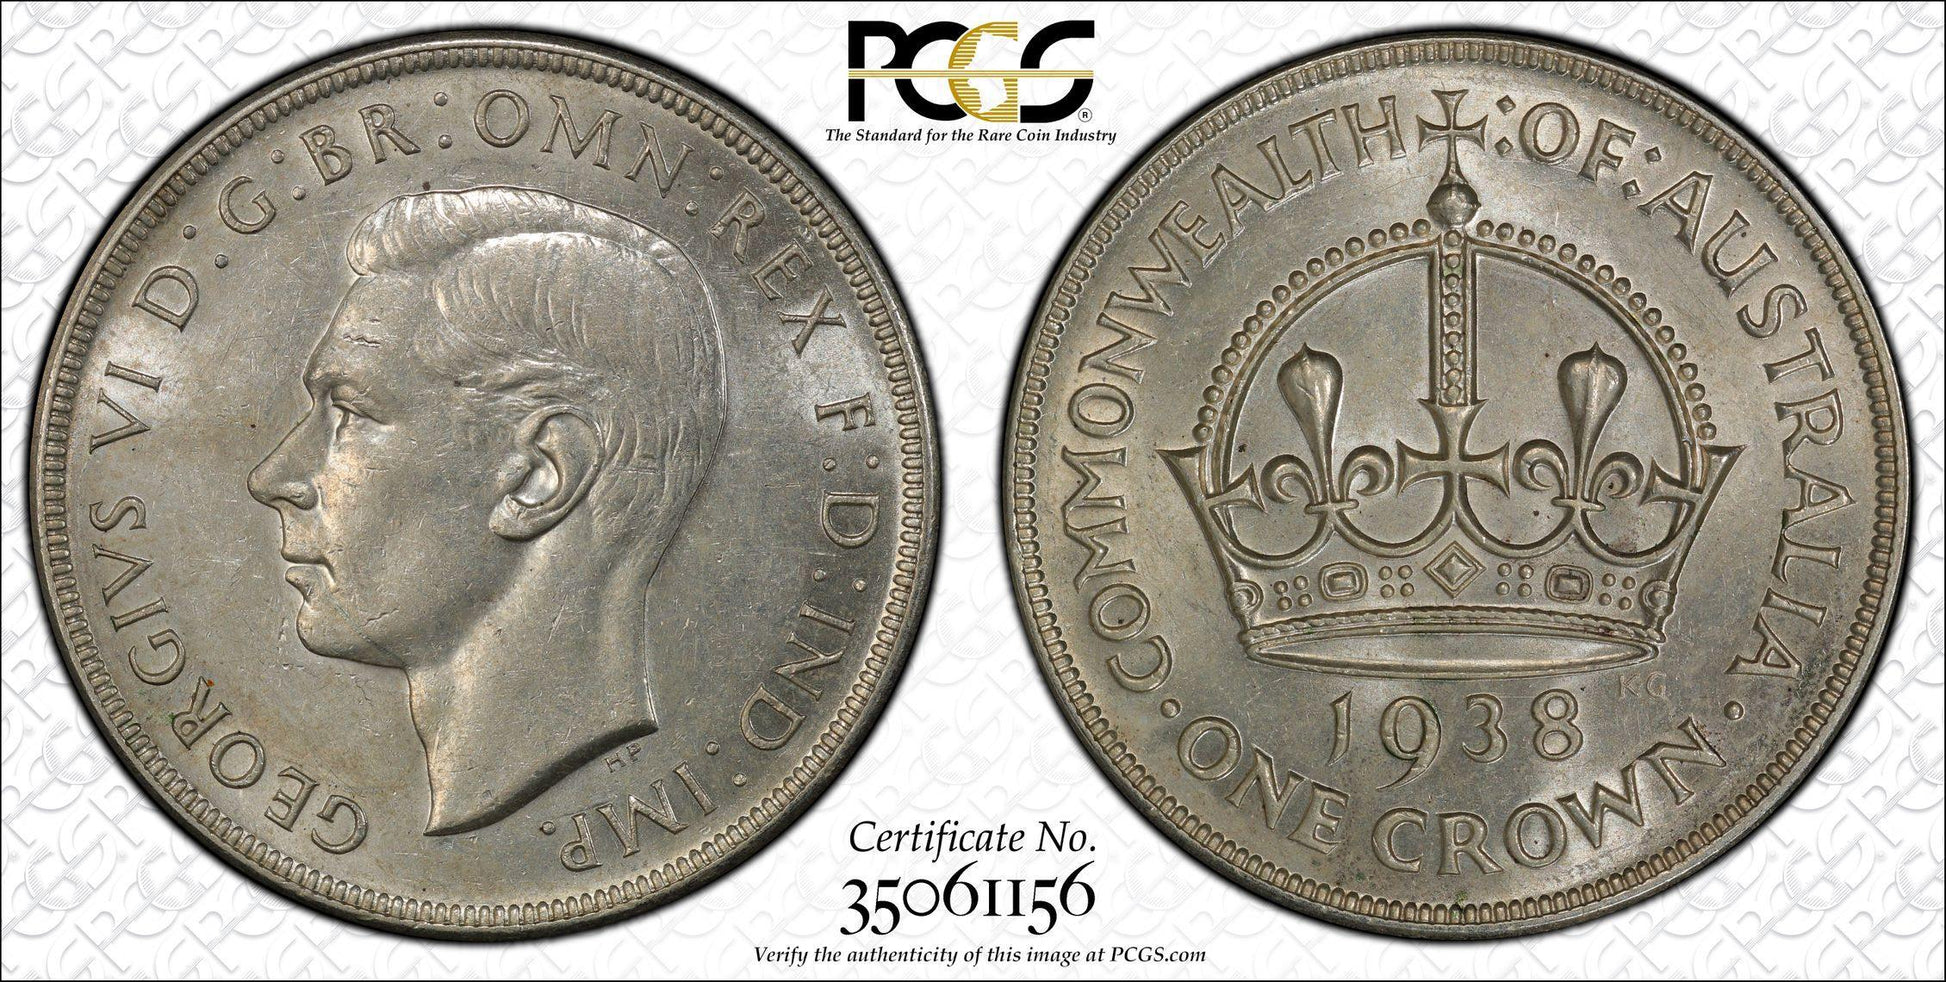 1938 (m) Australian Crown - Graded AU58 By PCGS - Loose Change Coins